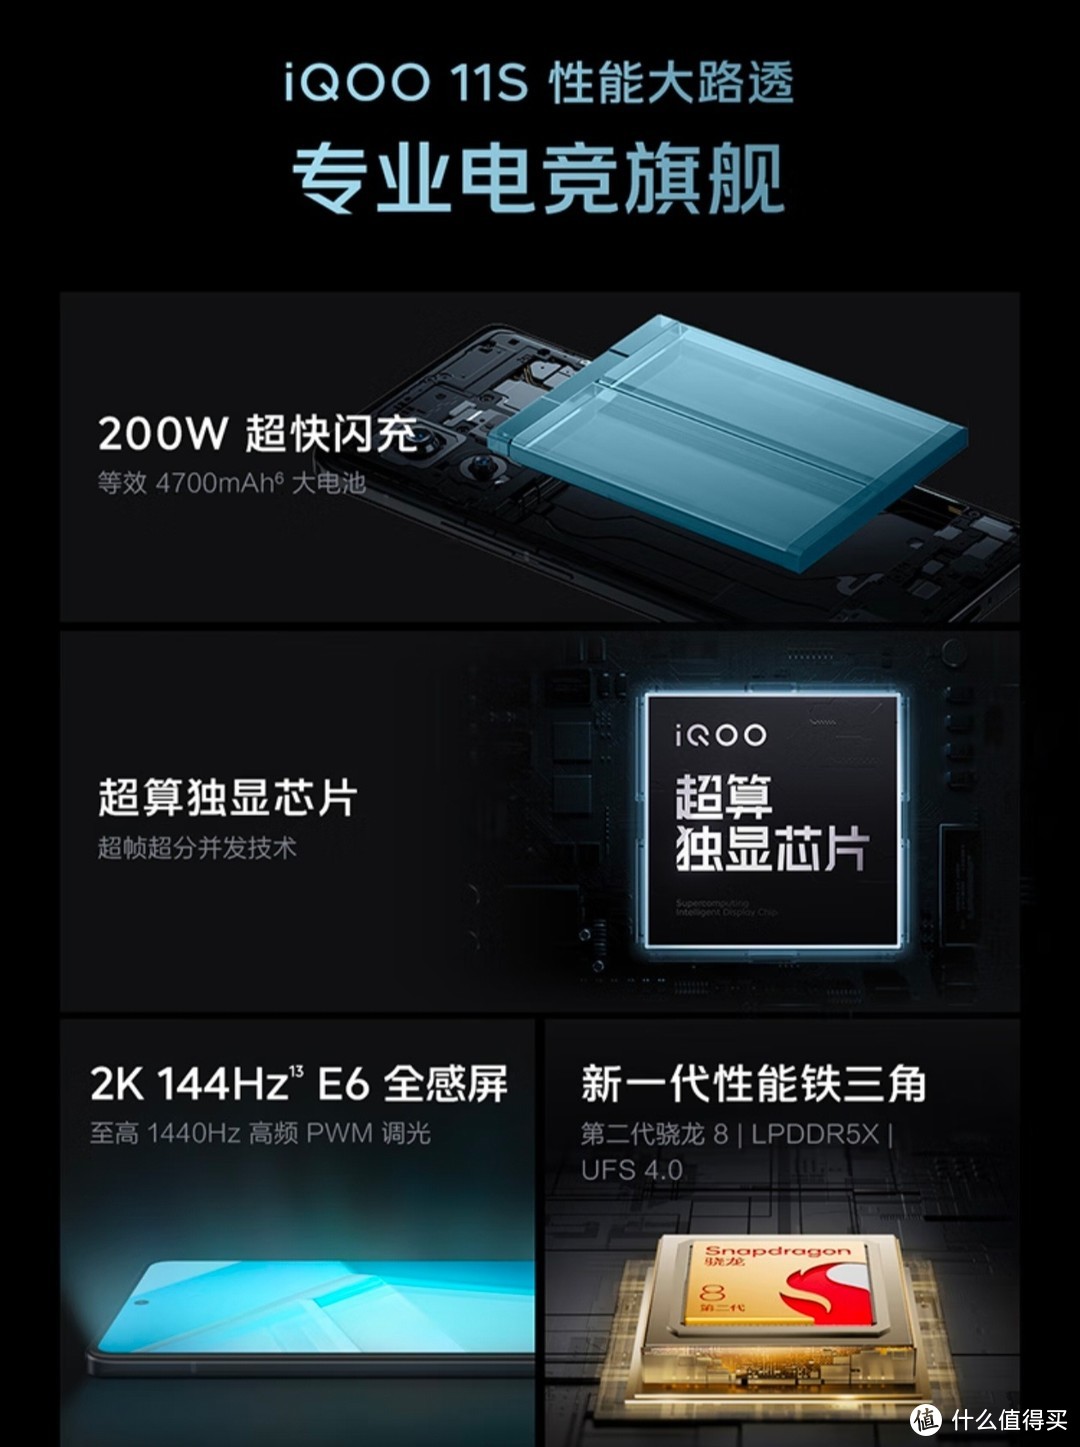 vivo iQOO 11S 16GB+512GB 钱塘听潮 2K 144Hz E6全感屏 200W闪充 超算独显芯片 第二代骁龙8 